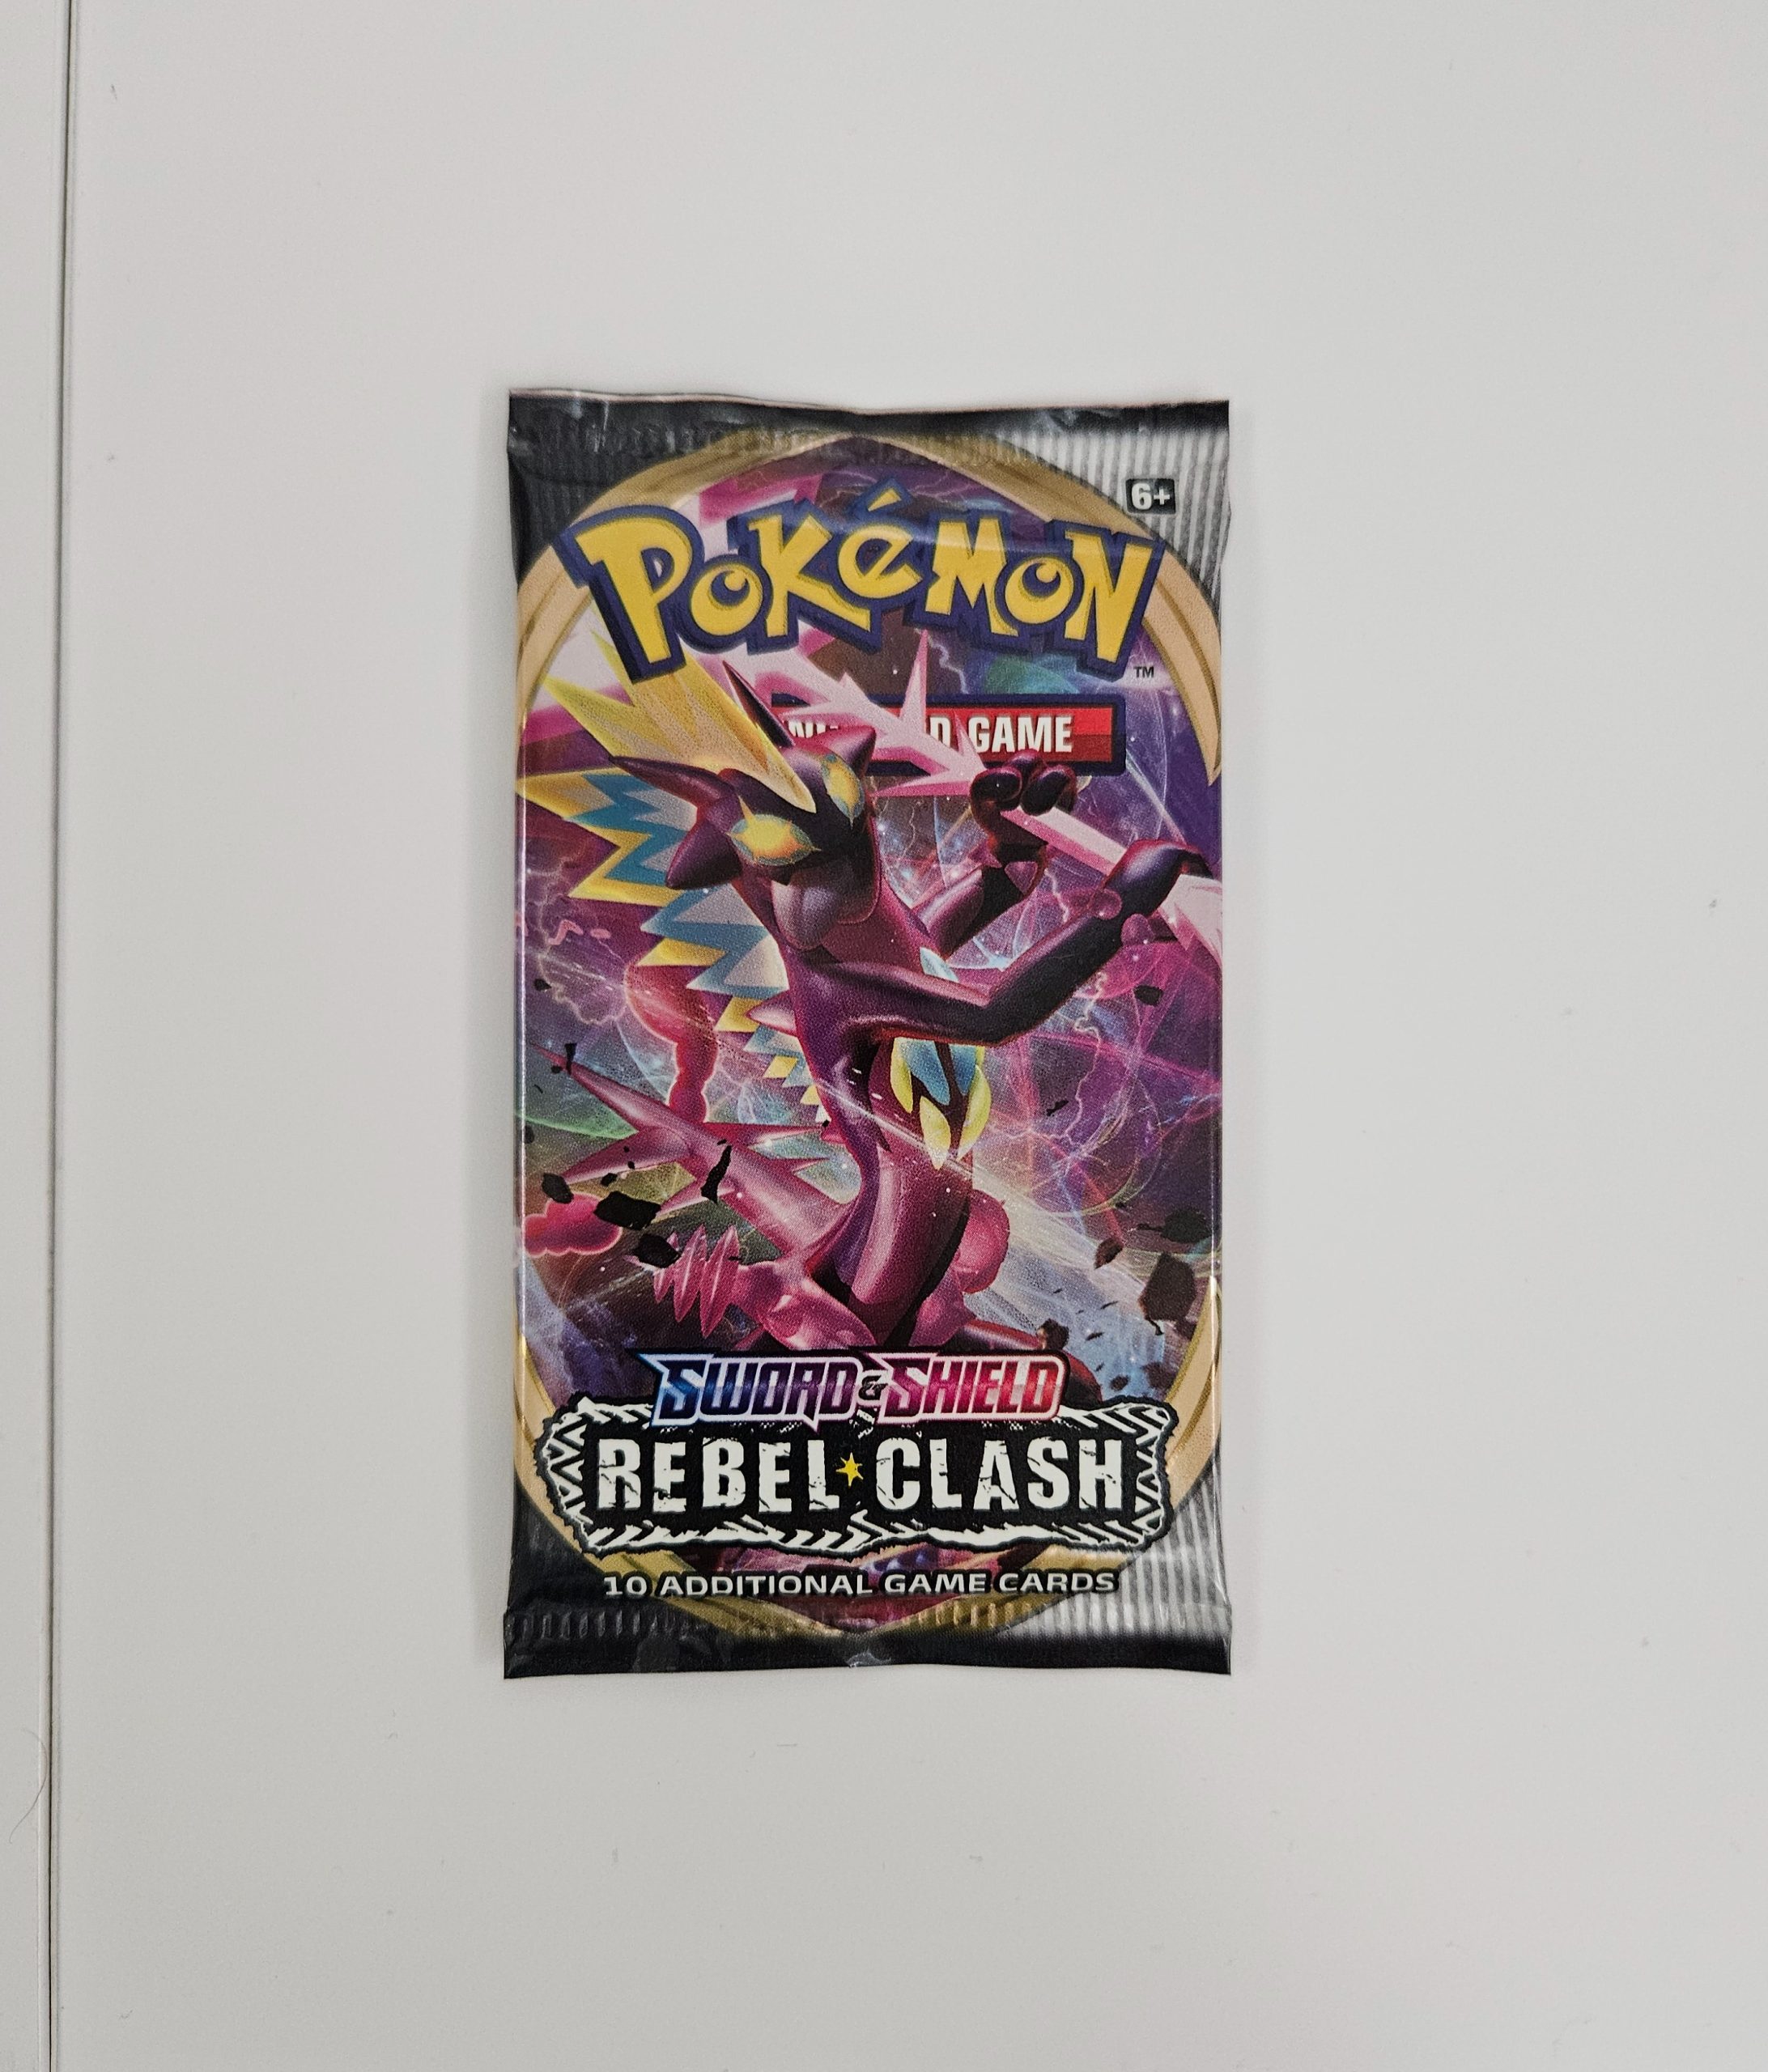 Rebel clash booster pack